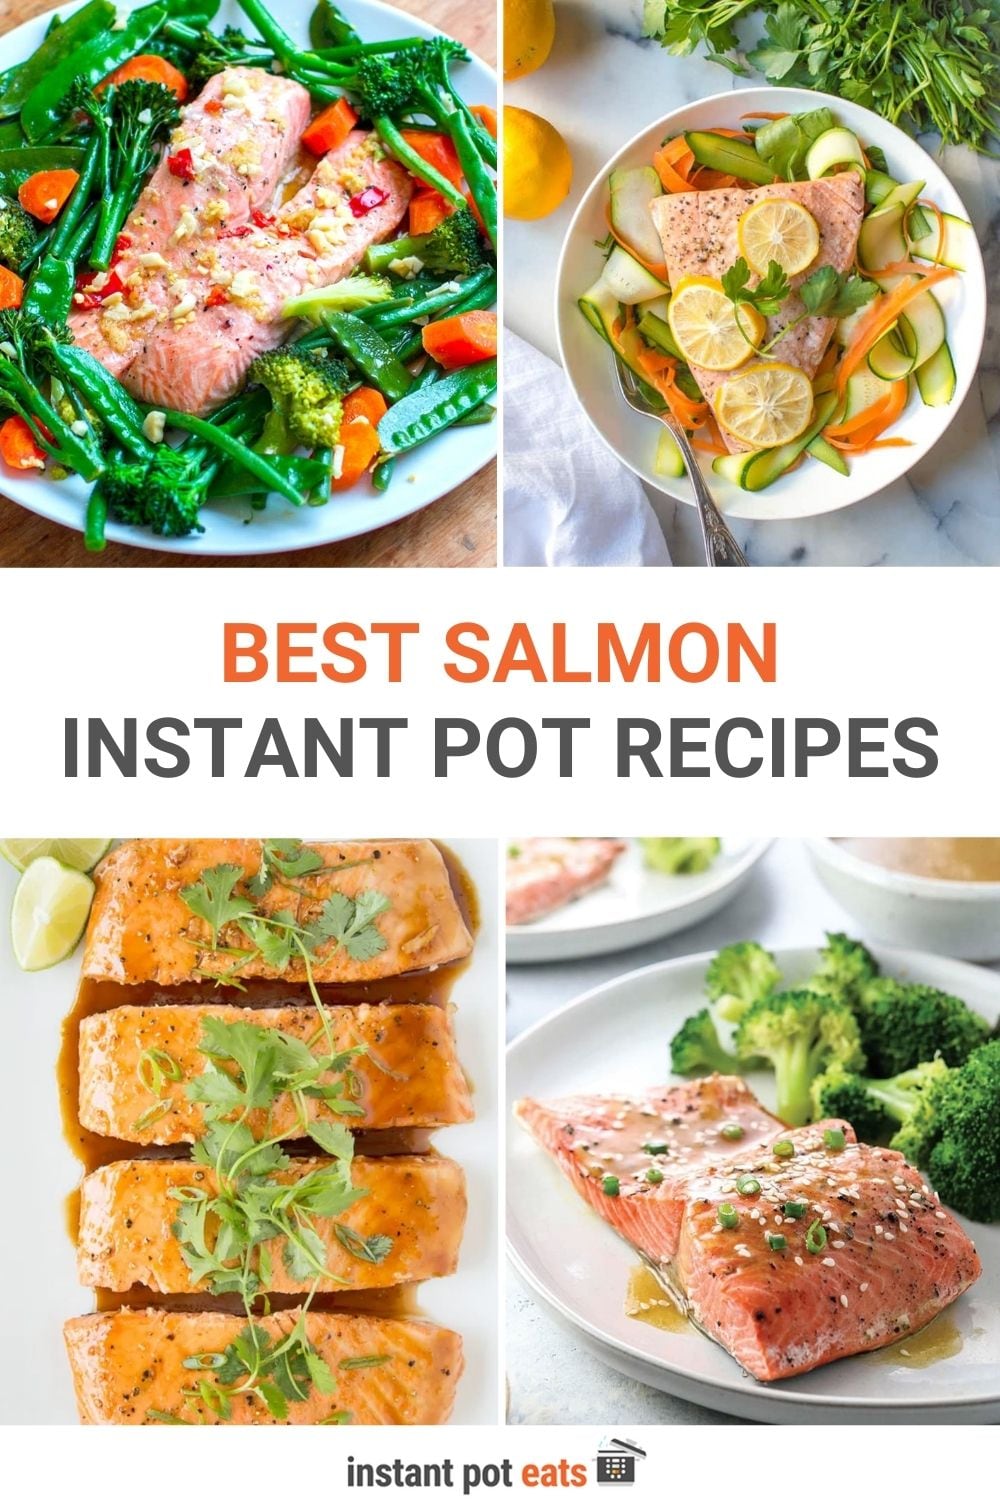 Instant Pot Salmon Recipes